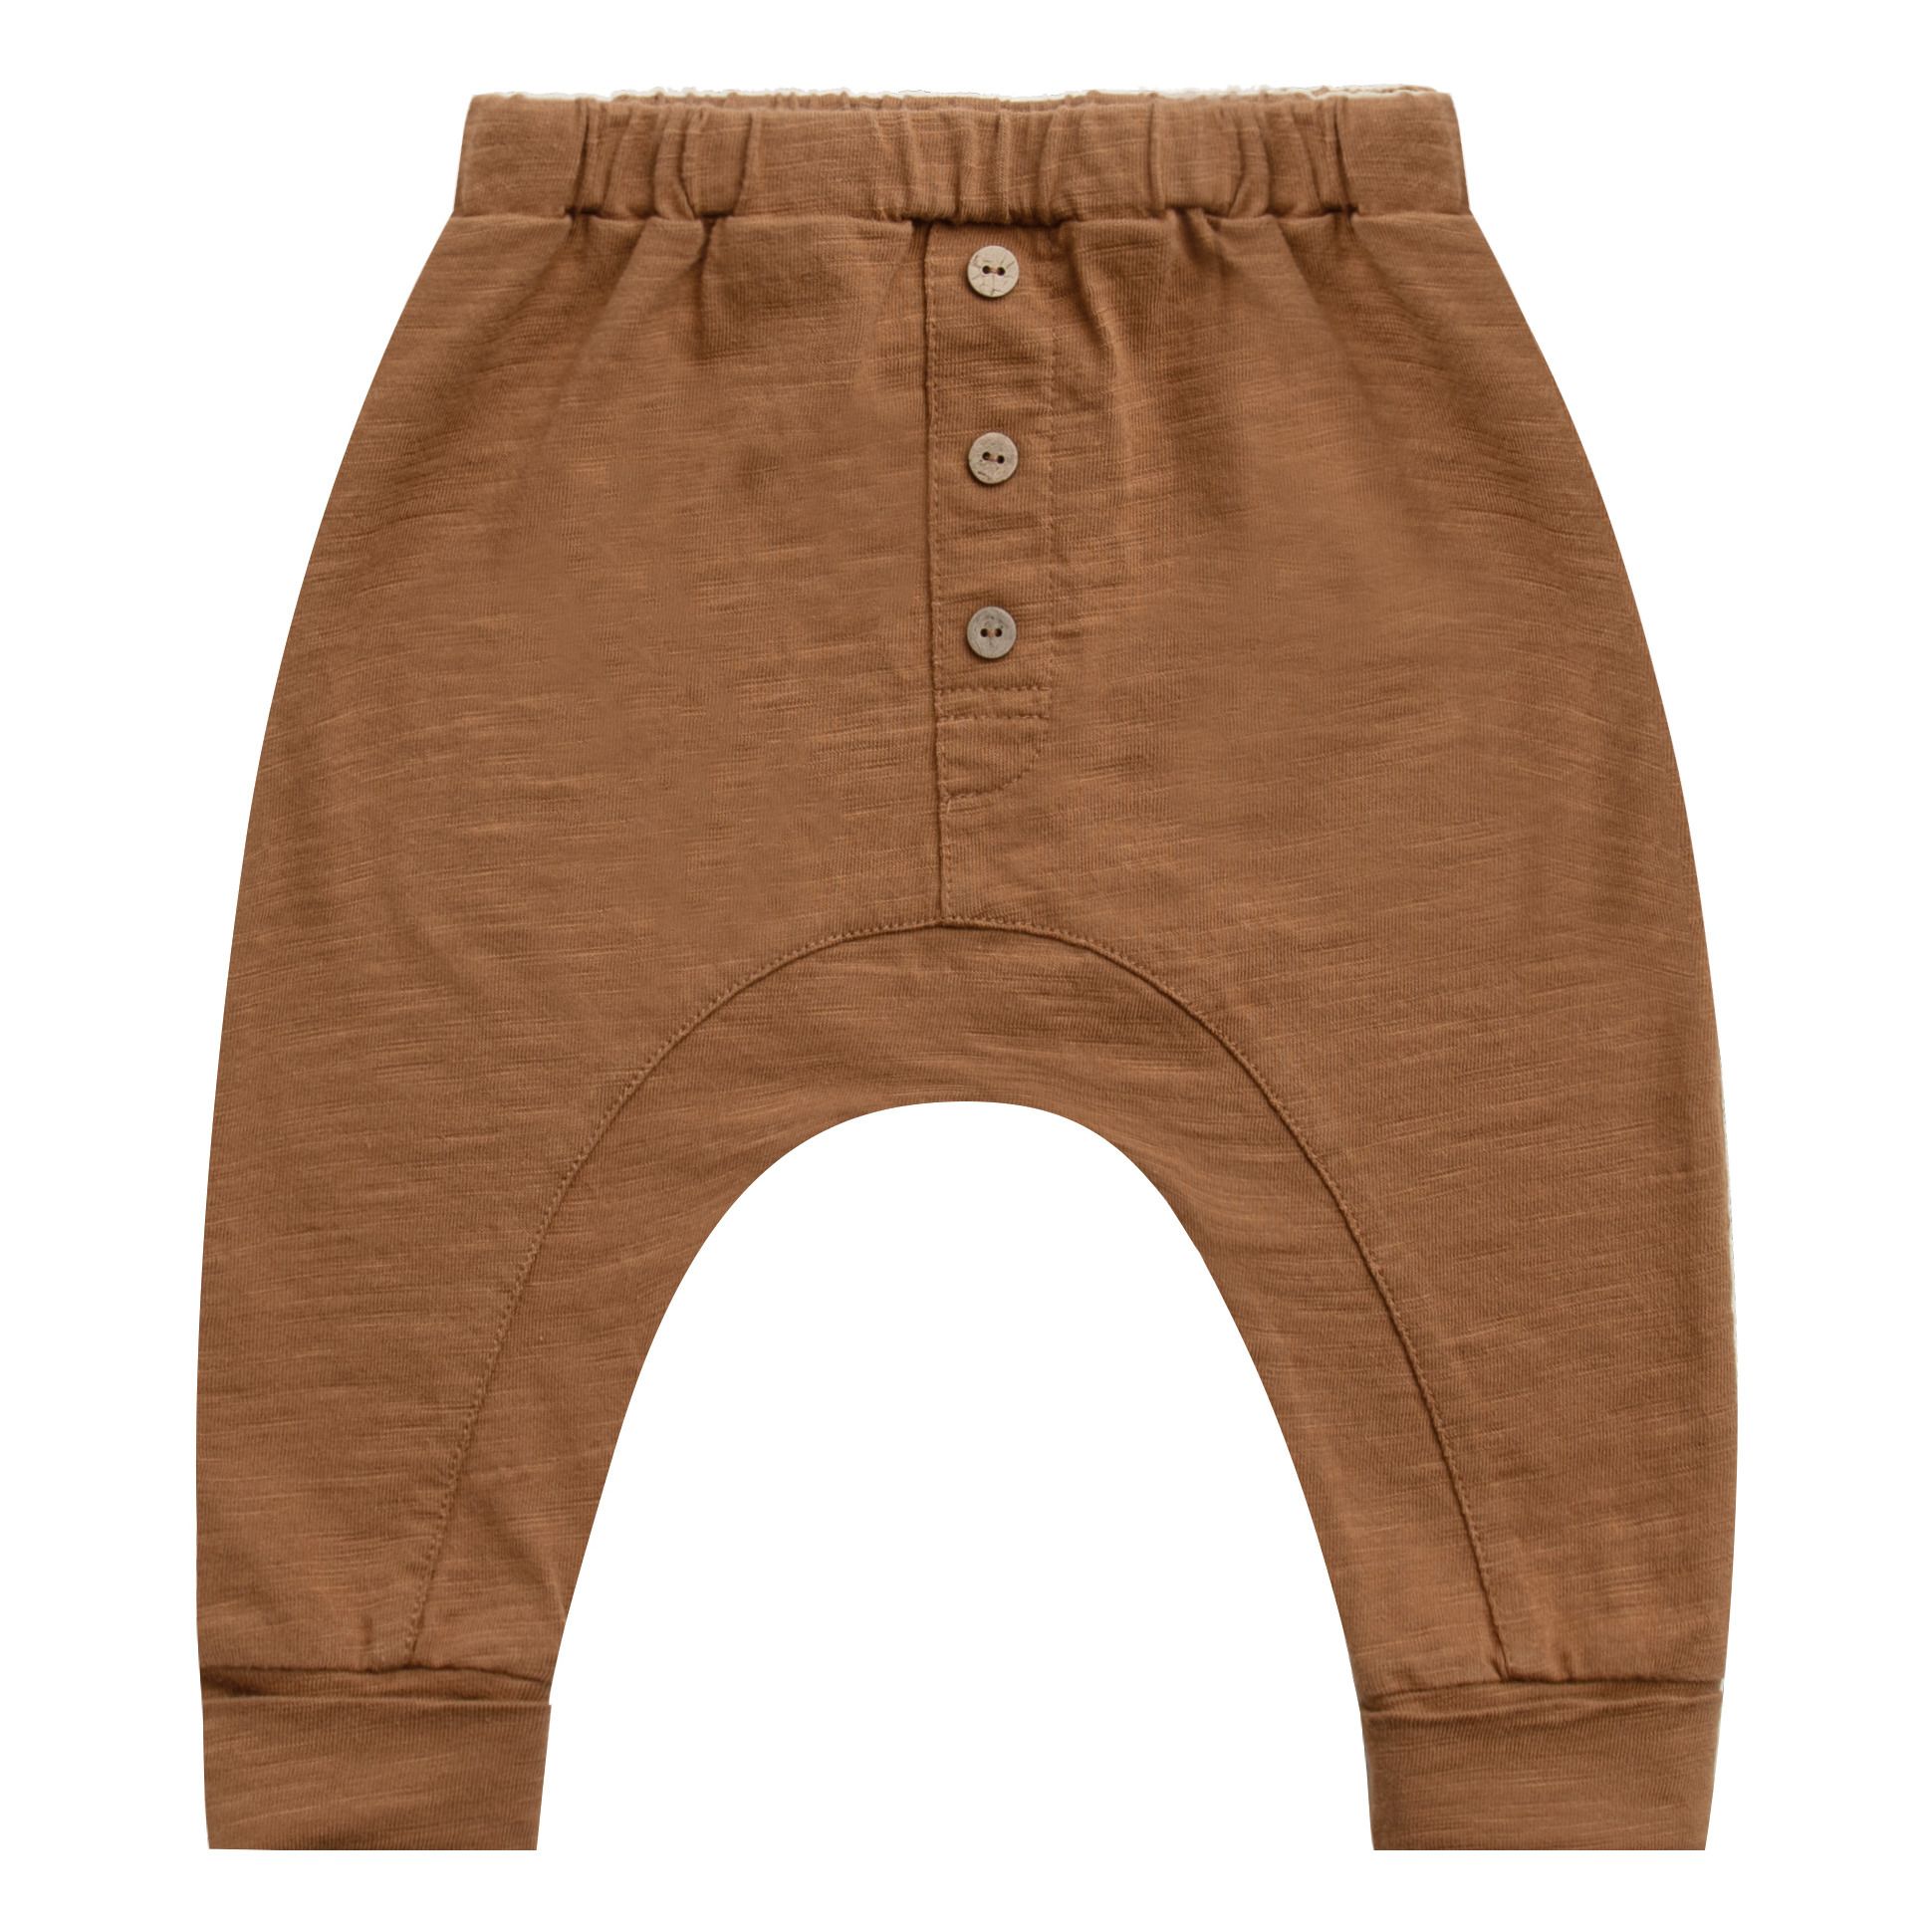 Rylee + Cru - Pantalon Sarouel Rust - Fille - Camel